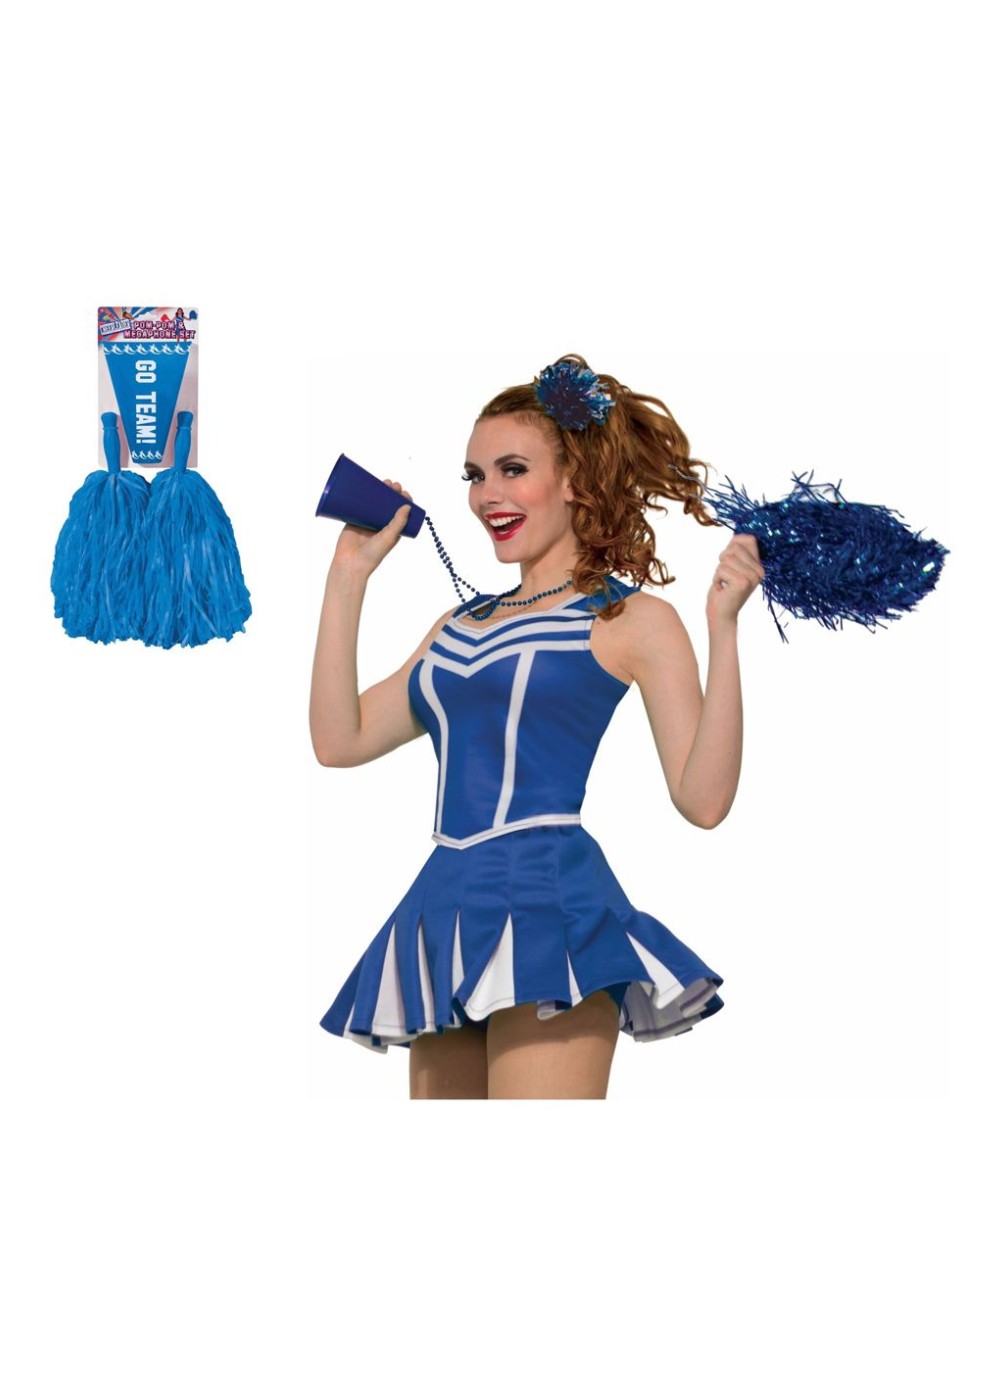 Blue Cheerleader Women Costume Kit